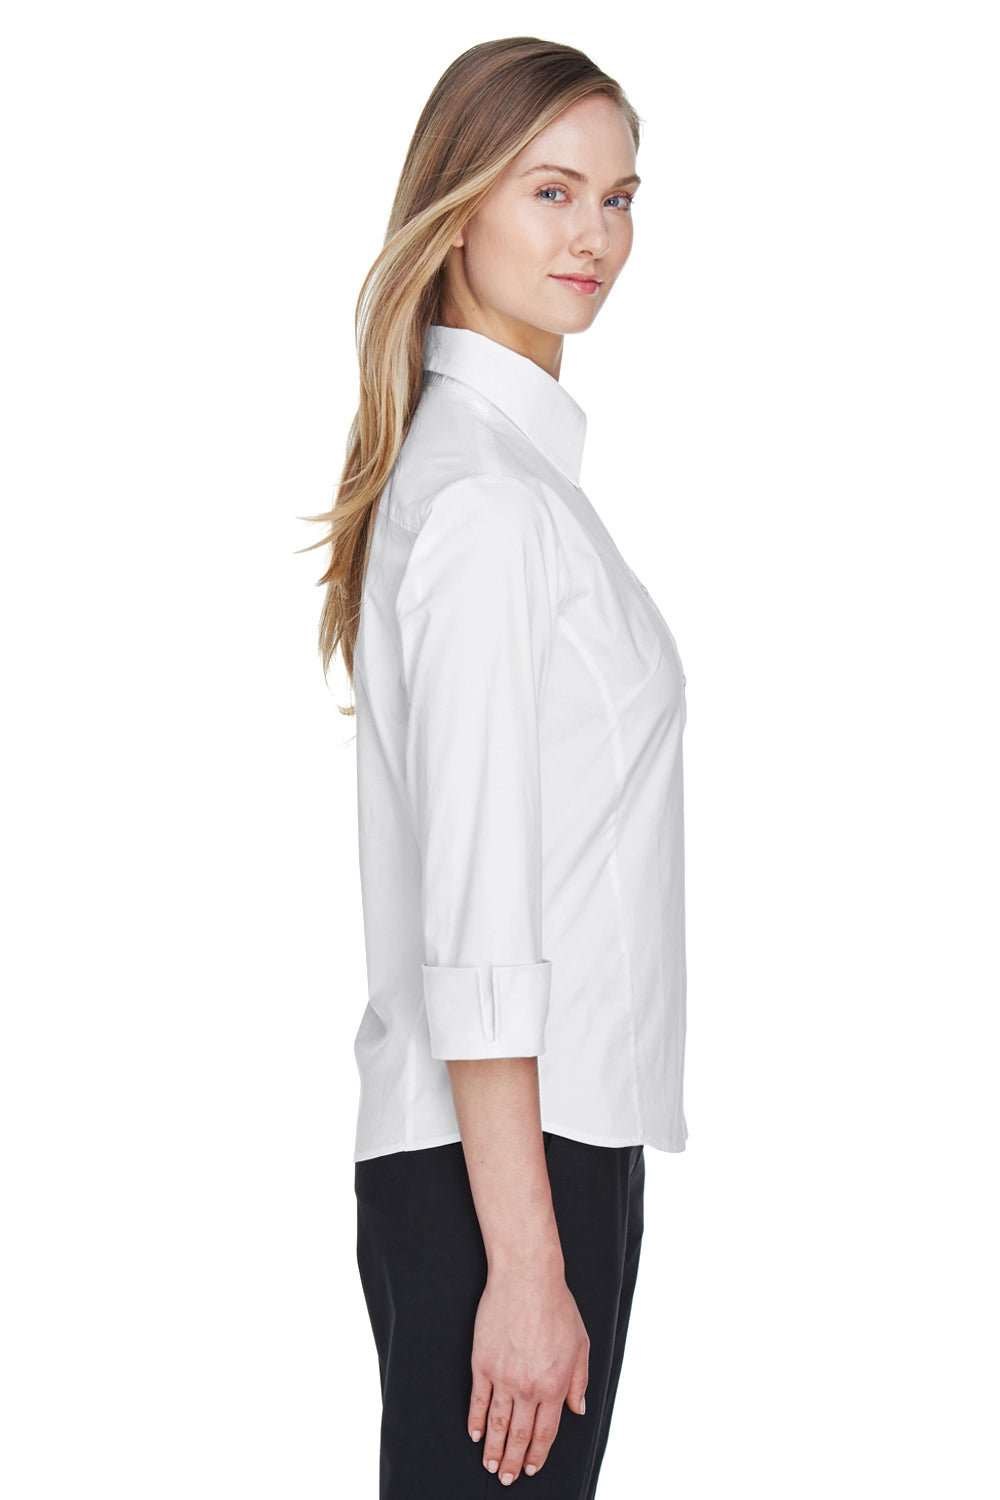 Devon & Jones DP625W Womens Perfect Fit 3/4 Sleeve Button Down Shirt White Side